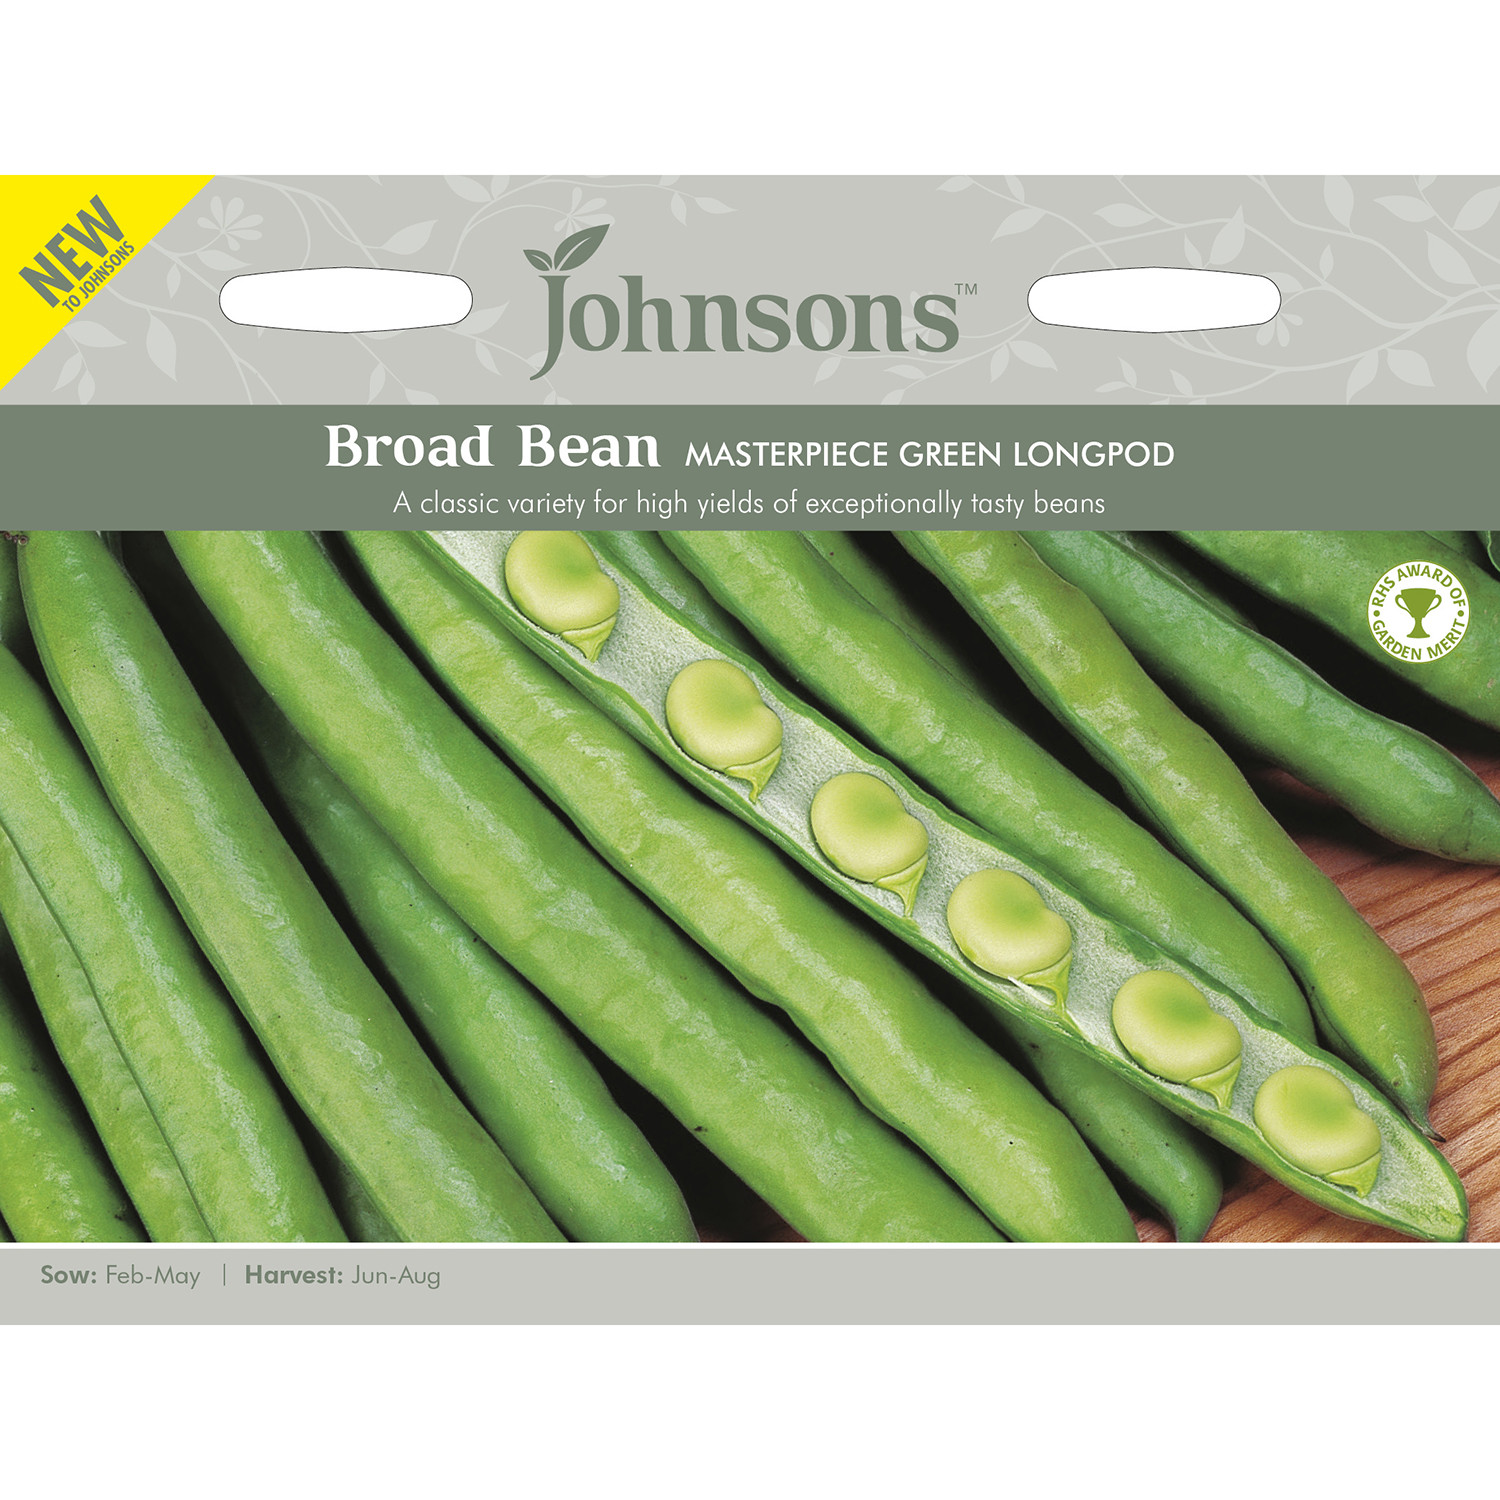 Johnsons Masterpiece Green Longpod Broad Bean Seeds Image 2